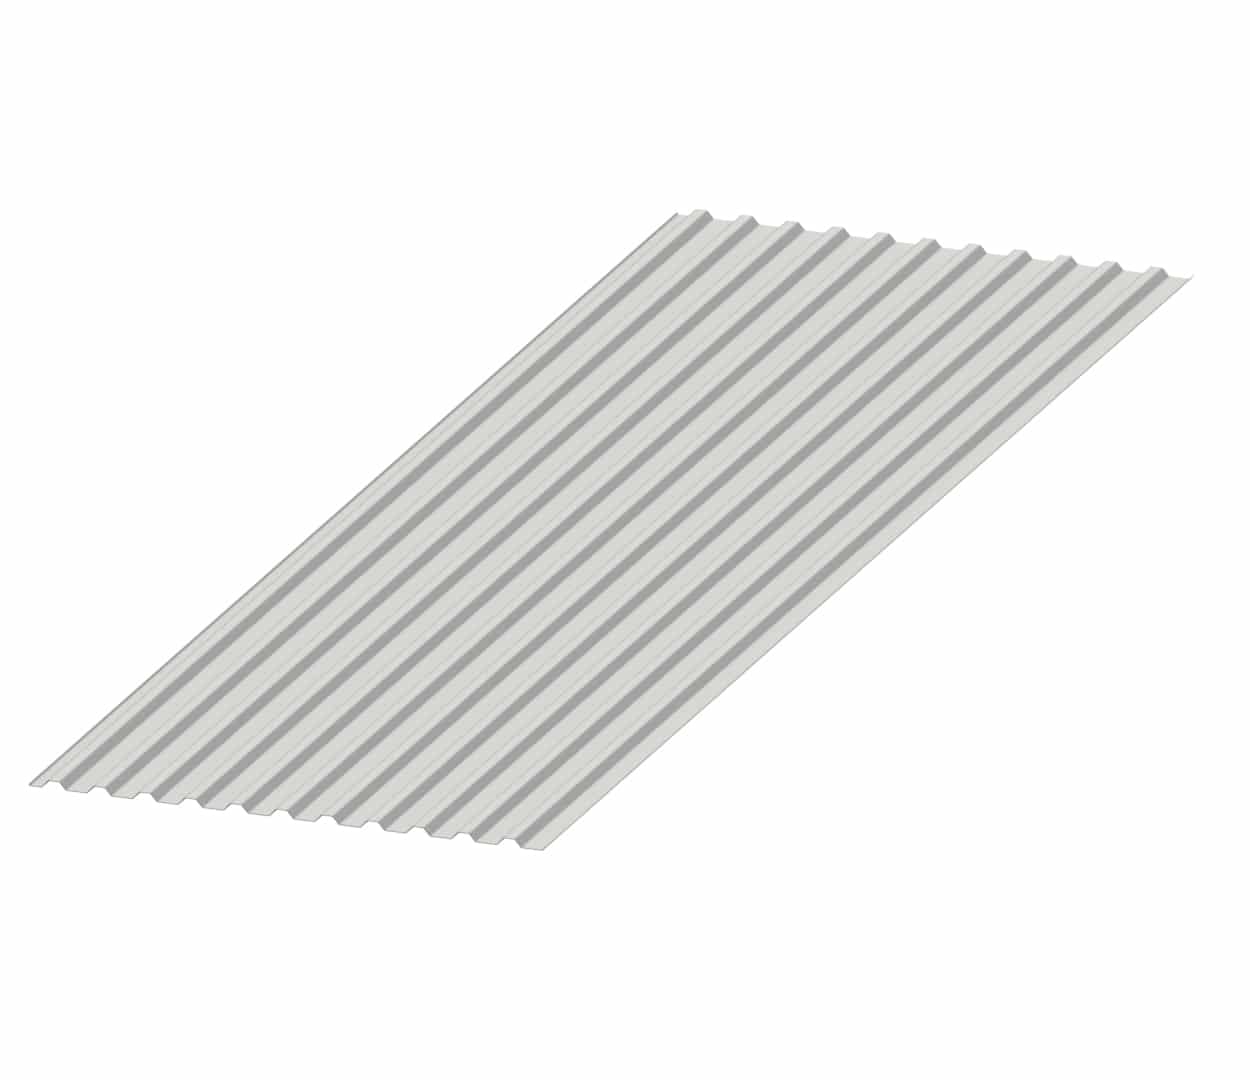 0.6C Steel Form Deck